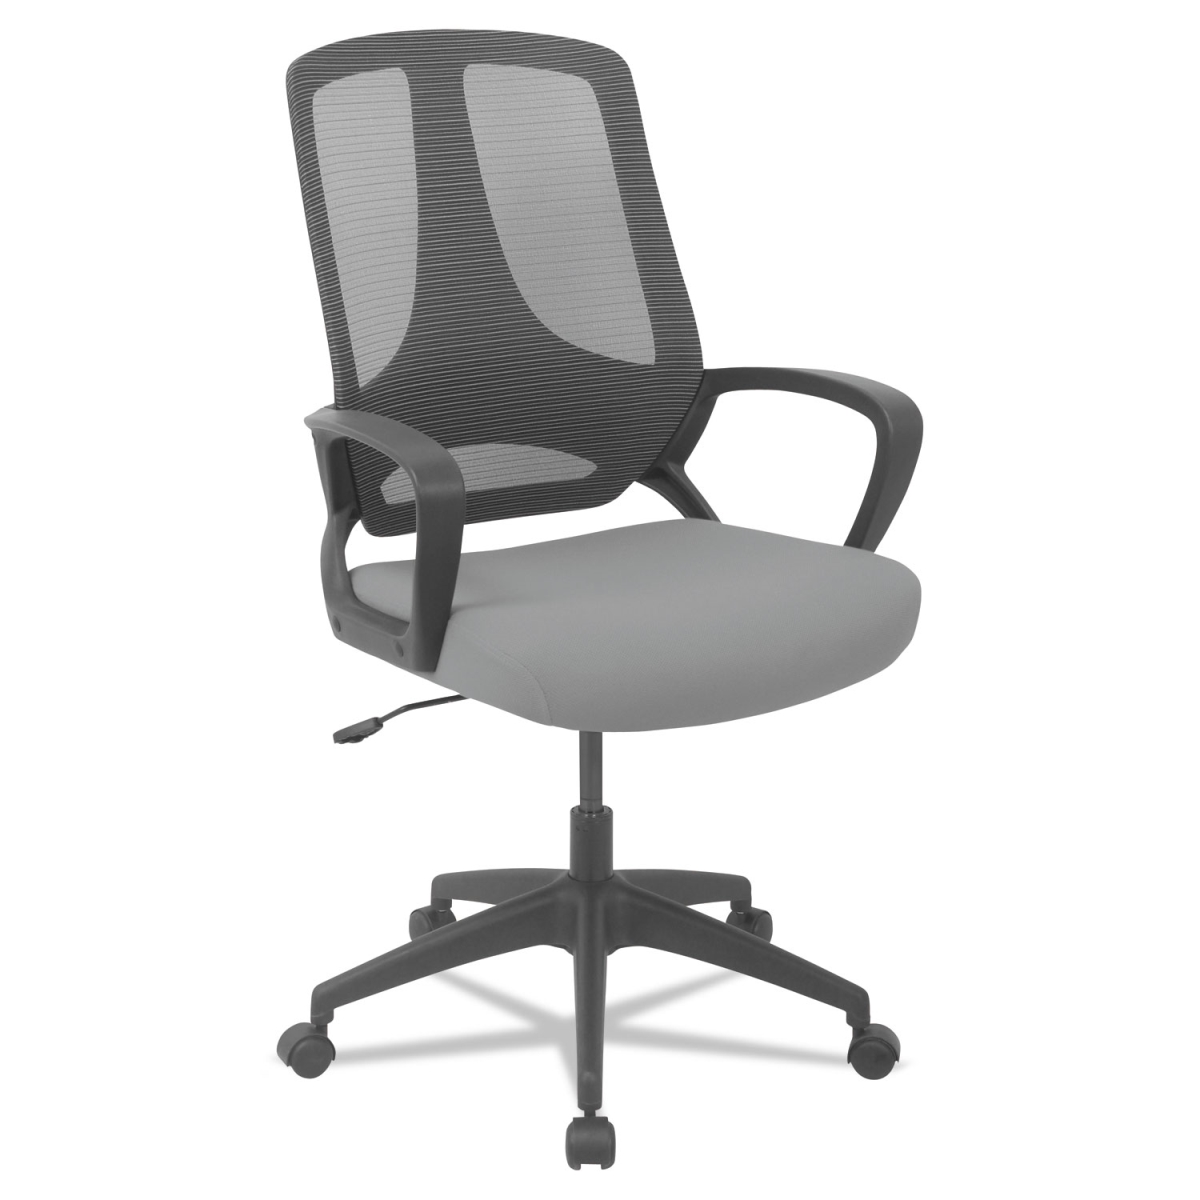 Alera Alemb4748 Mb Series Mesh Mid-back Office Task Chair, Gray & Black